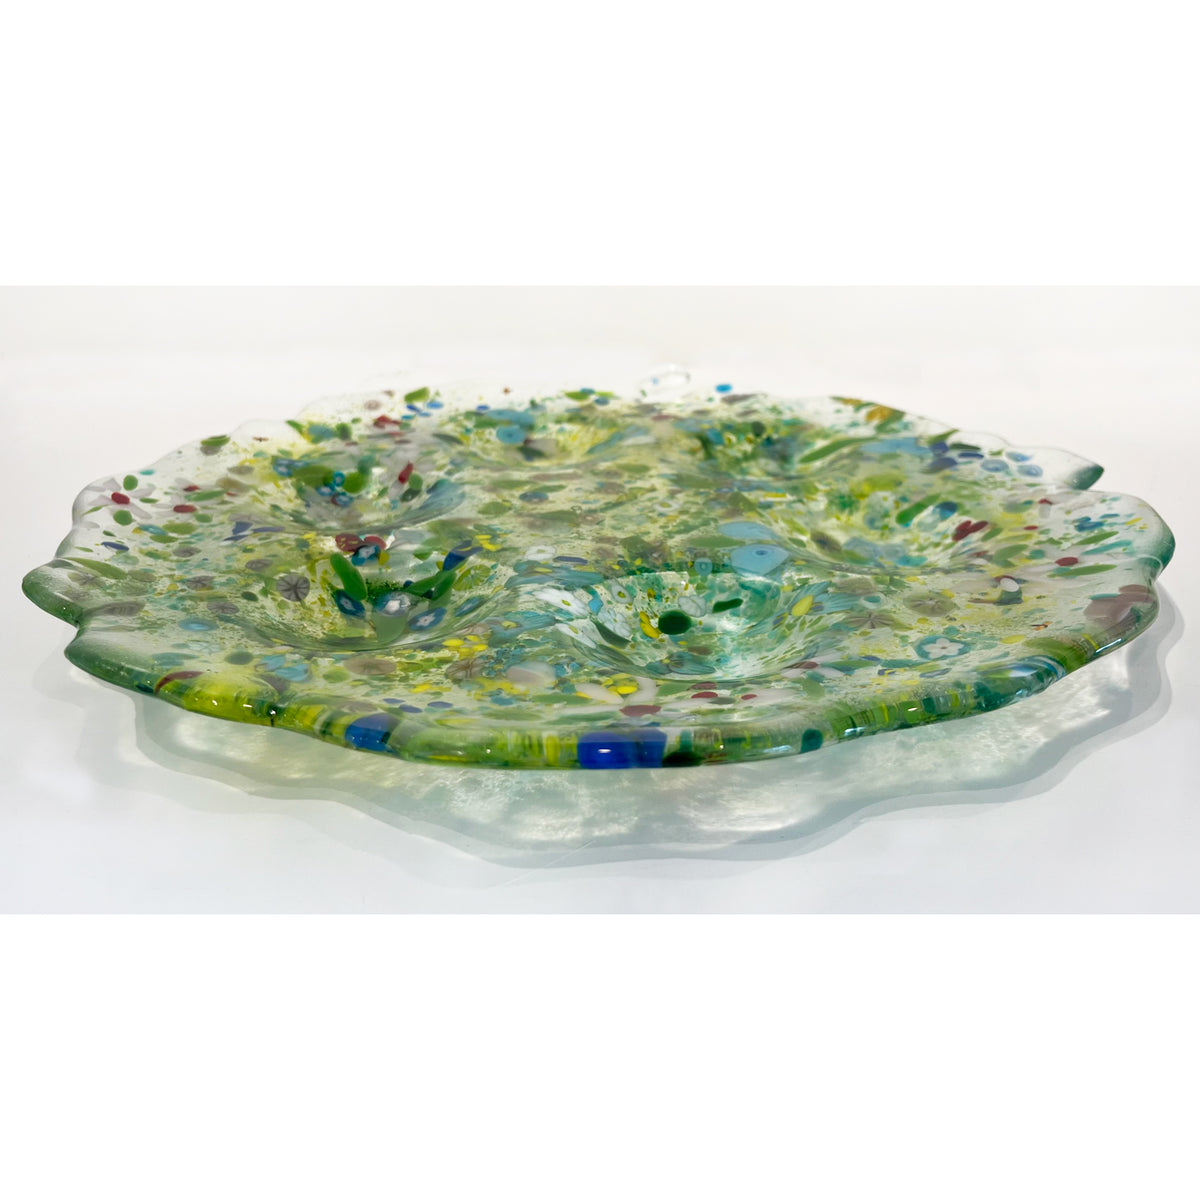 Marie Levine - Glass Wildflower Seder Plate